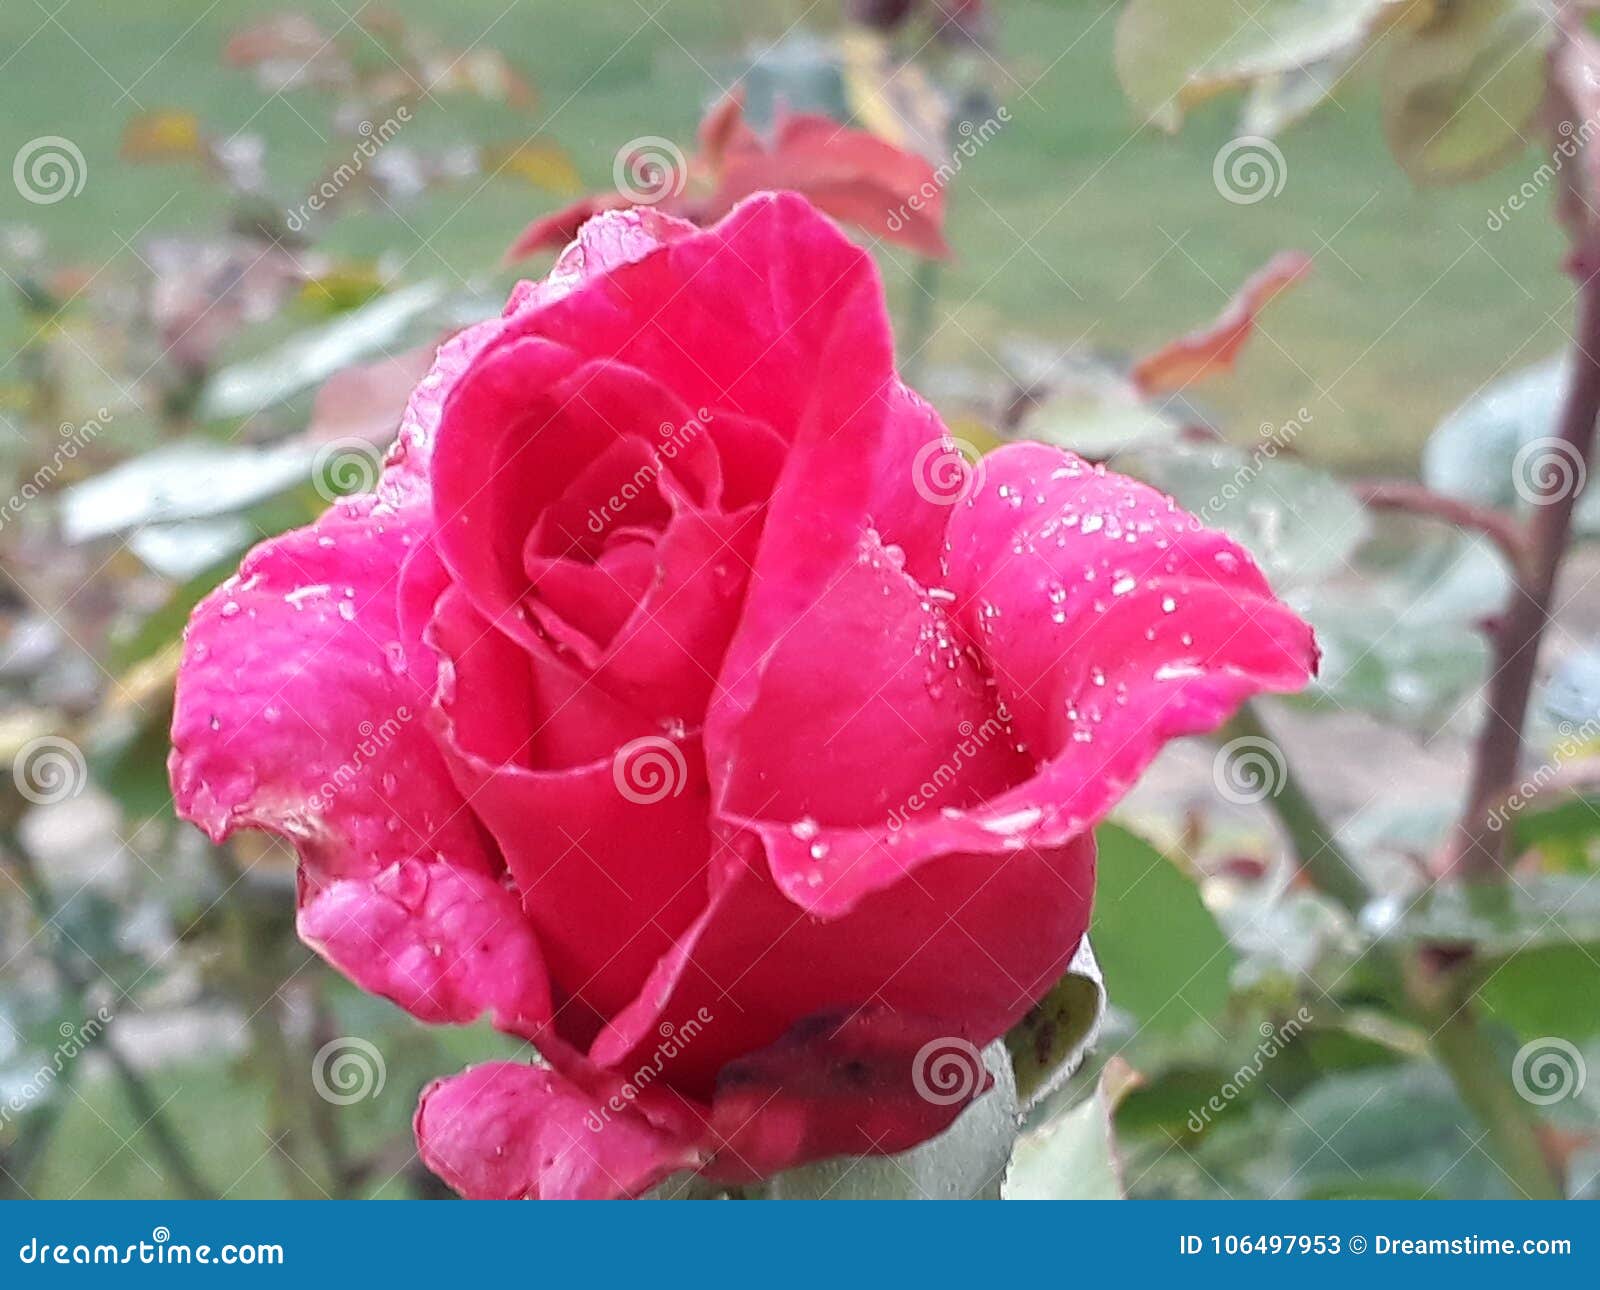 rosa color rosa / pink rose